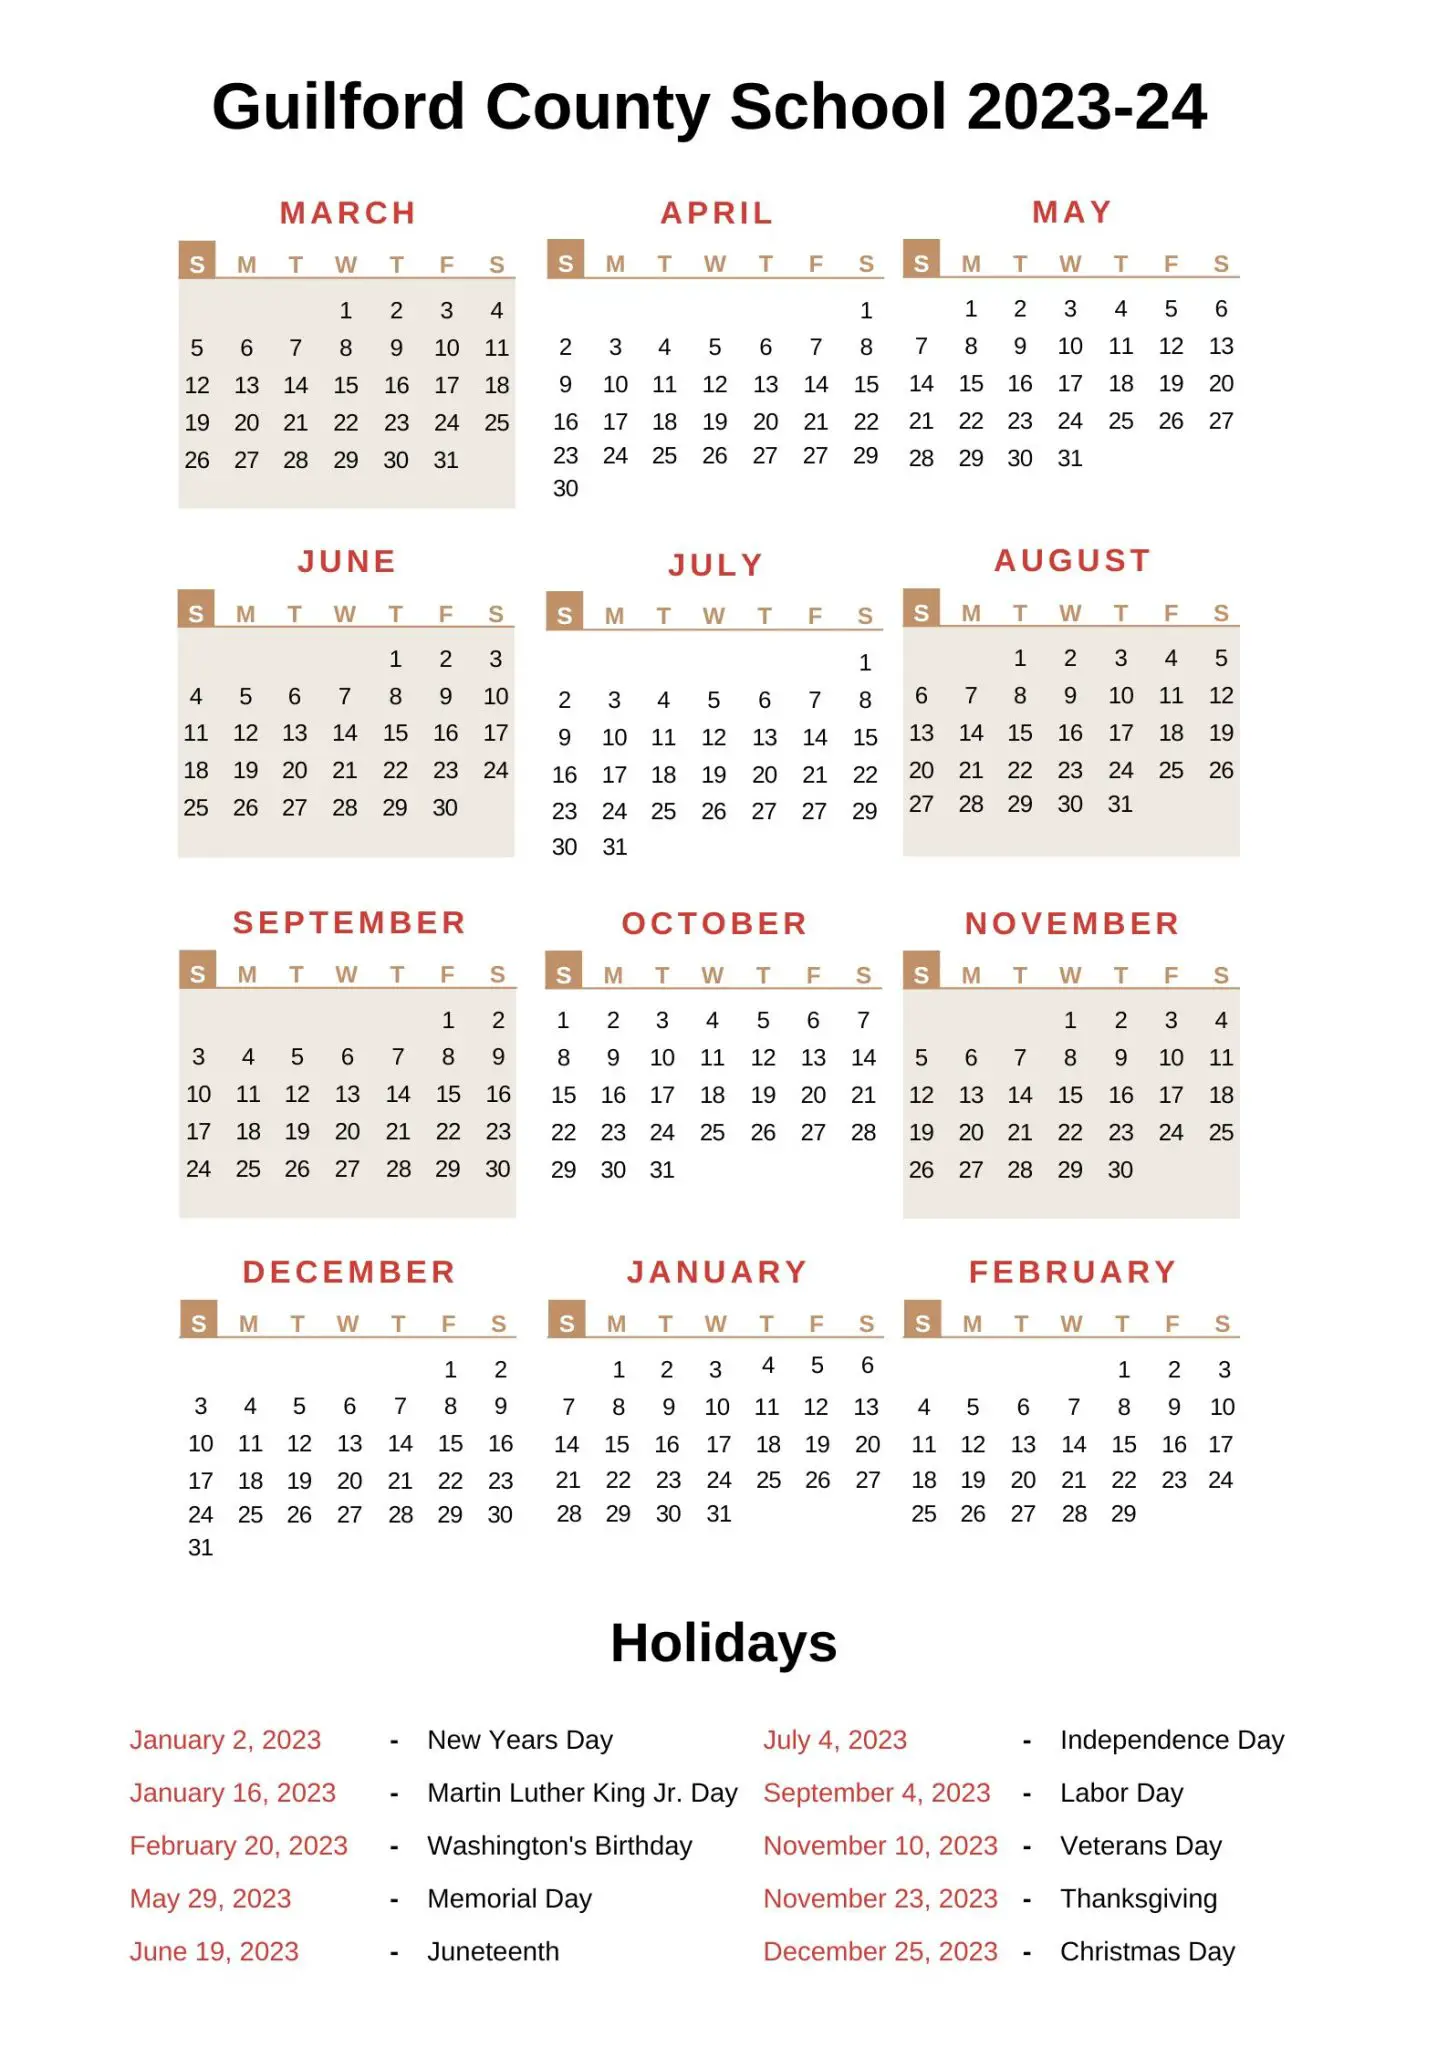 Guilford County Schools Calendar Archives - County School Calendar 2023-24